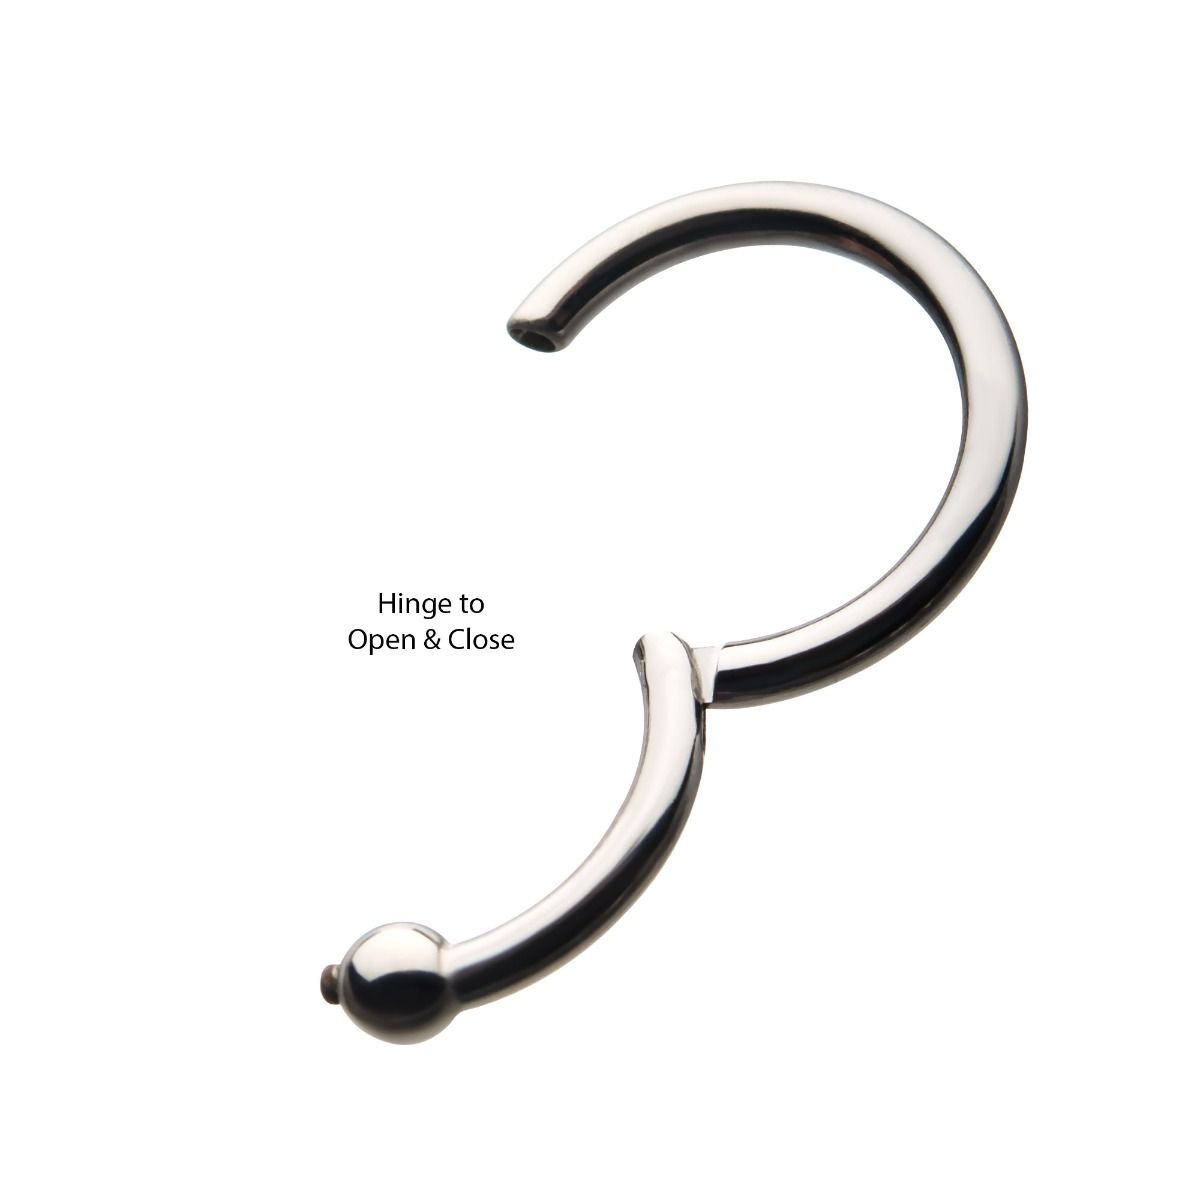 Titanium Clicker Ring 3mm Ball Hinged Segment Ring tisgrha8 -Rebel Bod-RebelBod